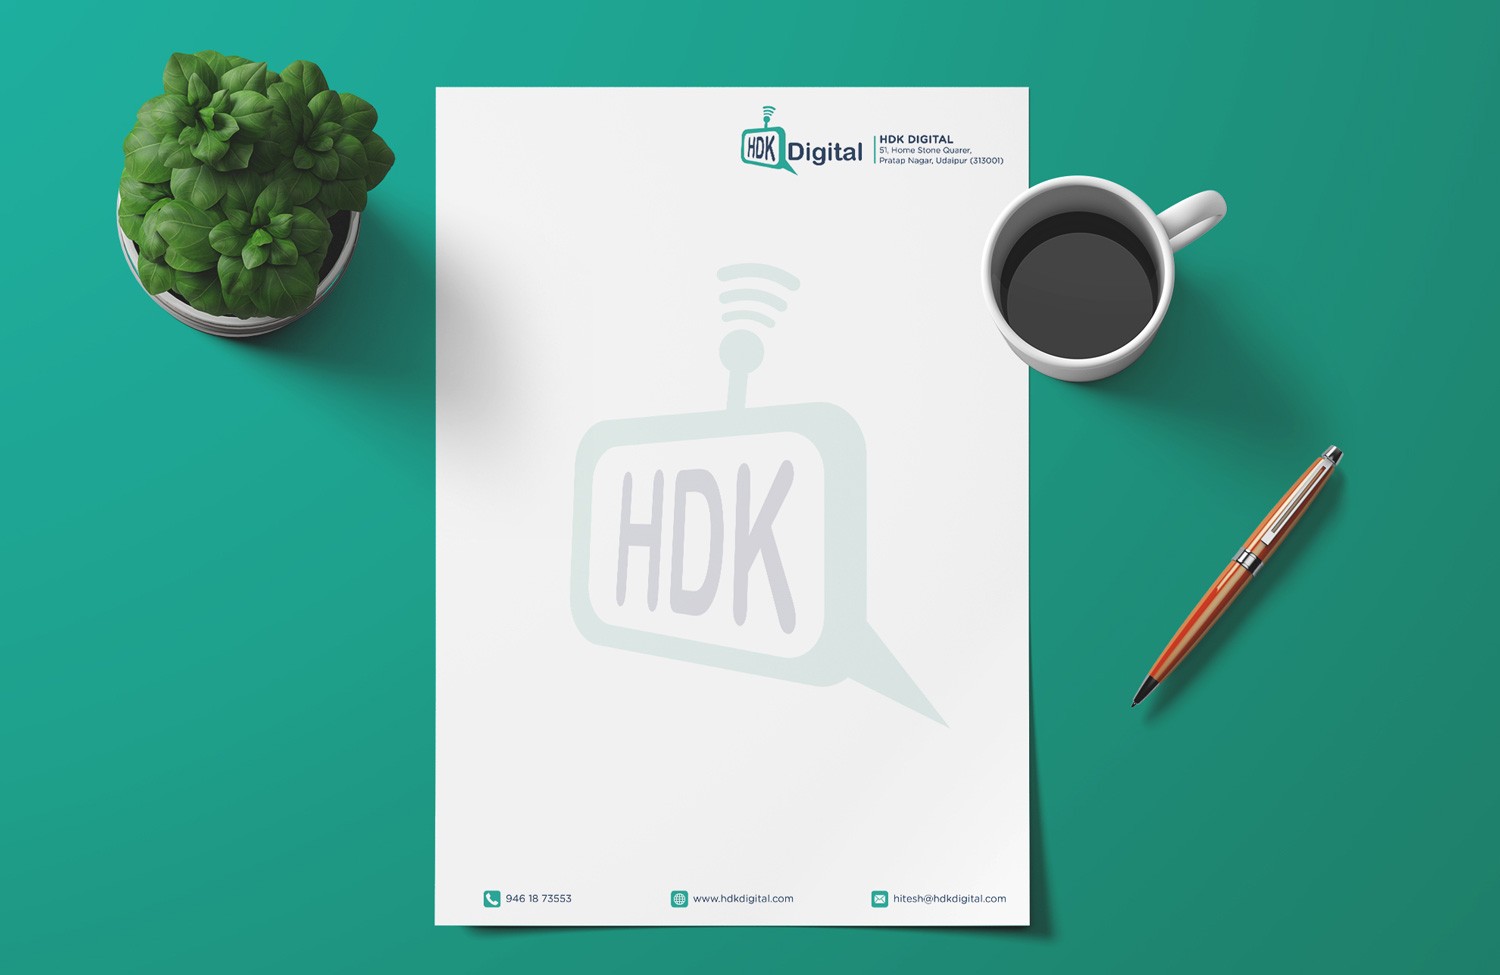 HDK Digital Letter Head Design